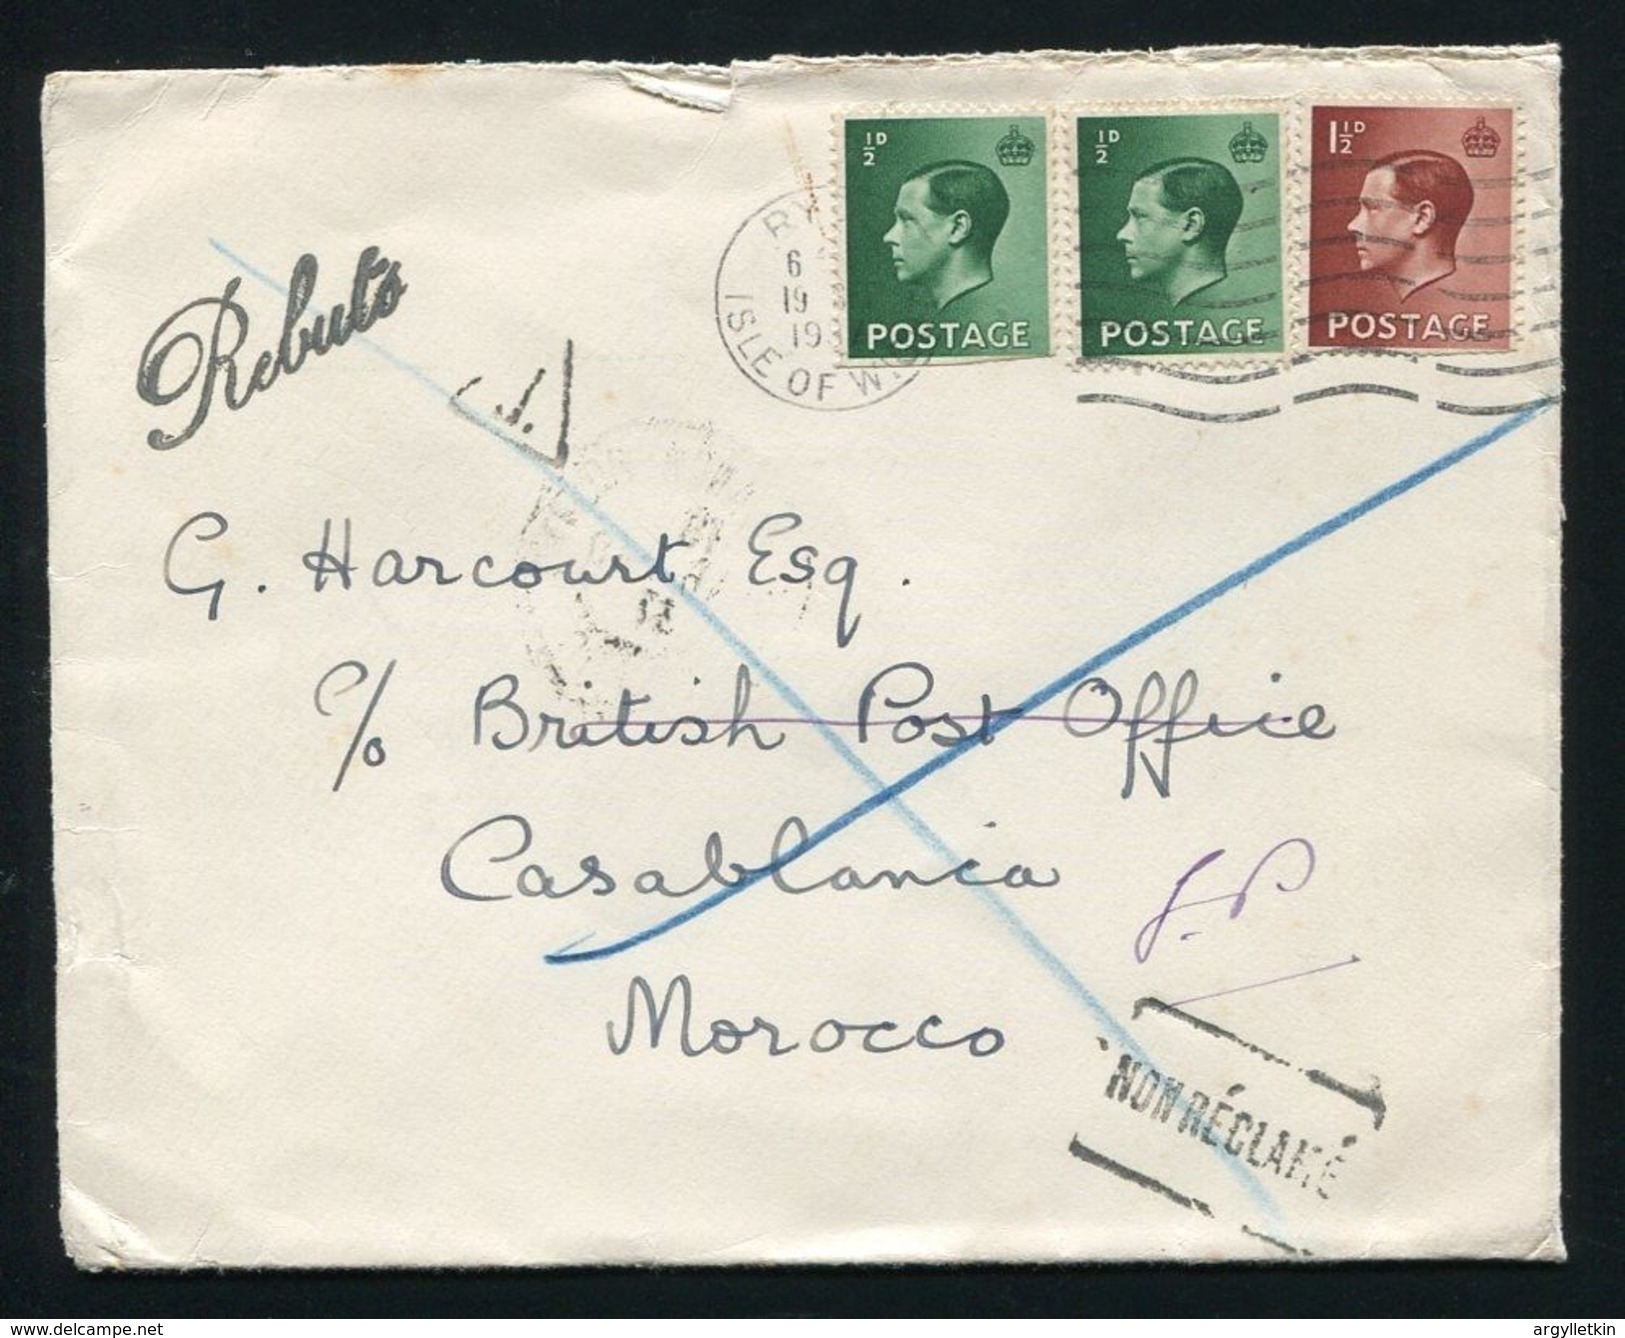 MOROCCO BRITISH & FRENCH P.O. CASABLANCA EDWARD 8TH - Morocco Agencies / Tangier (...-1958)